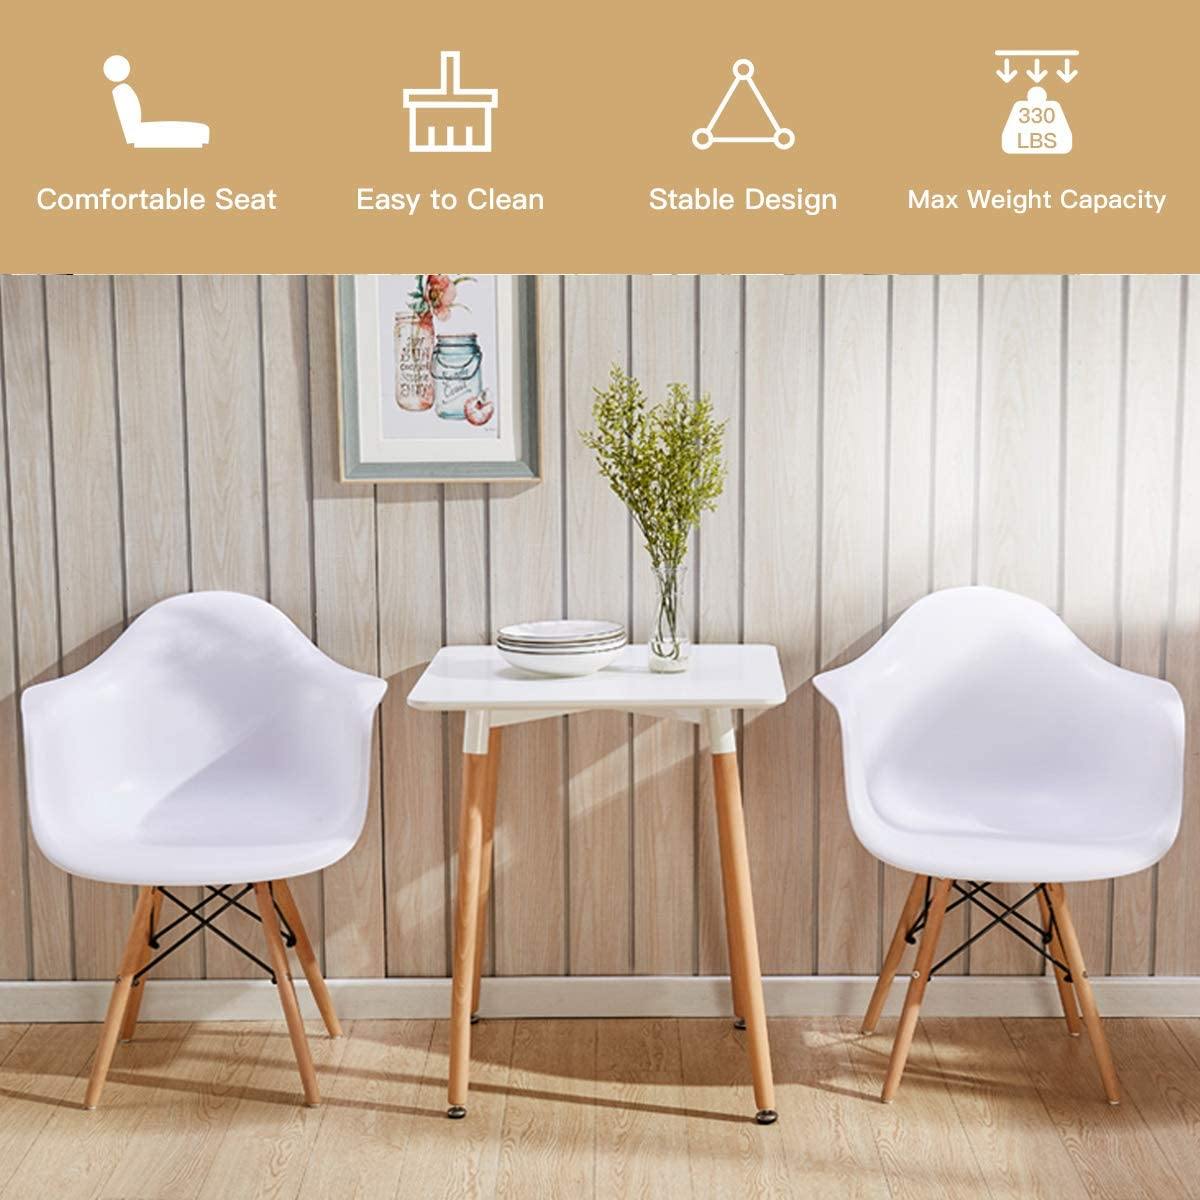 Set of 2 Modern Dining Chairs w/Natural Wood Legs - Giantexus